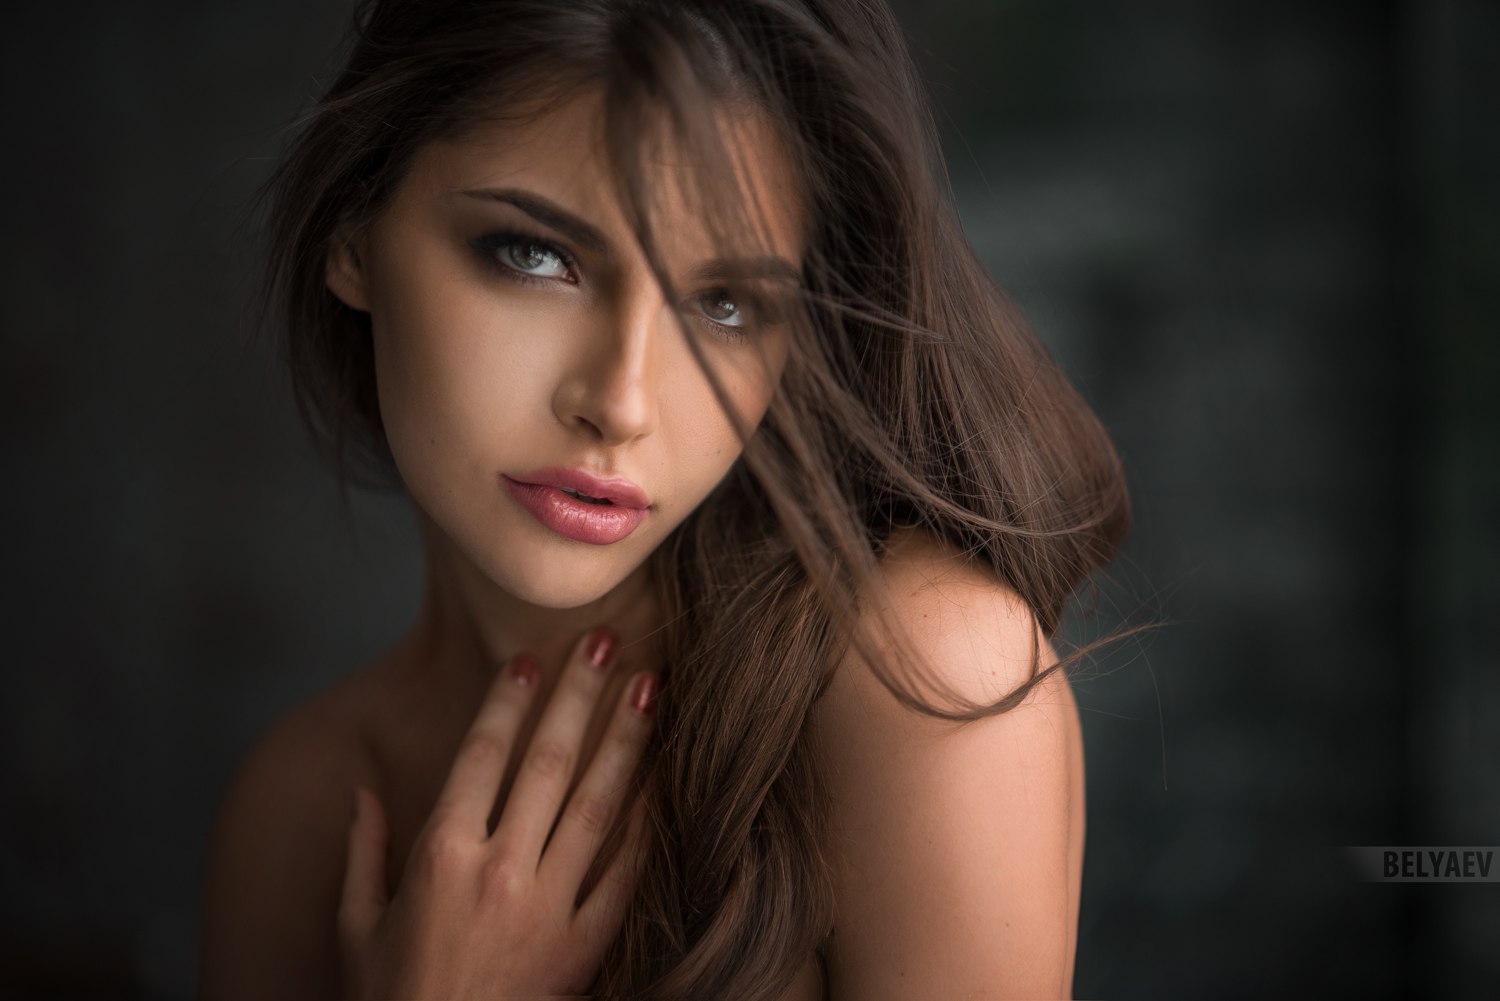 Dmitry Belyaev Model Women Brunette Gray Eyes Mouth Lips Lipstick Juicy Lips Bare 4211